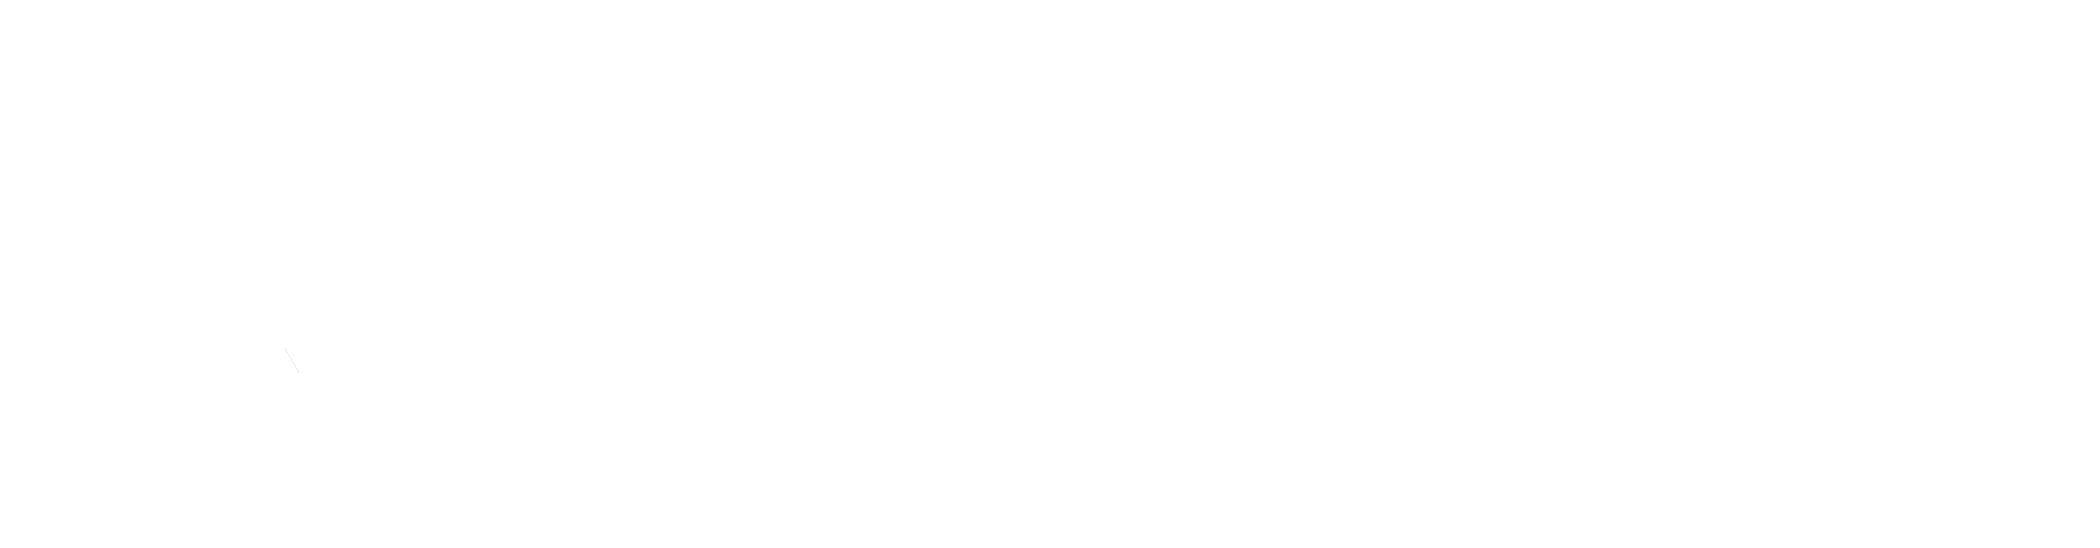 Advanced Energy United Logo for Distribution WHITE